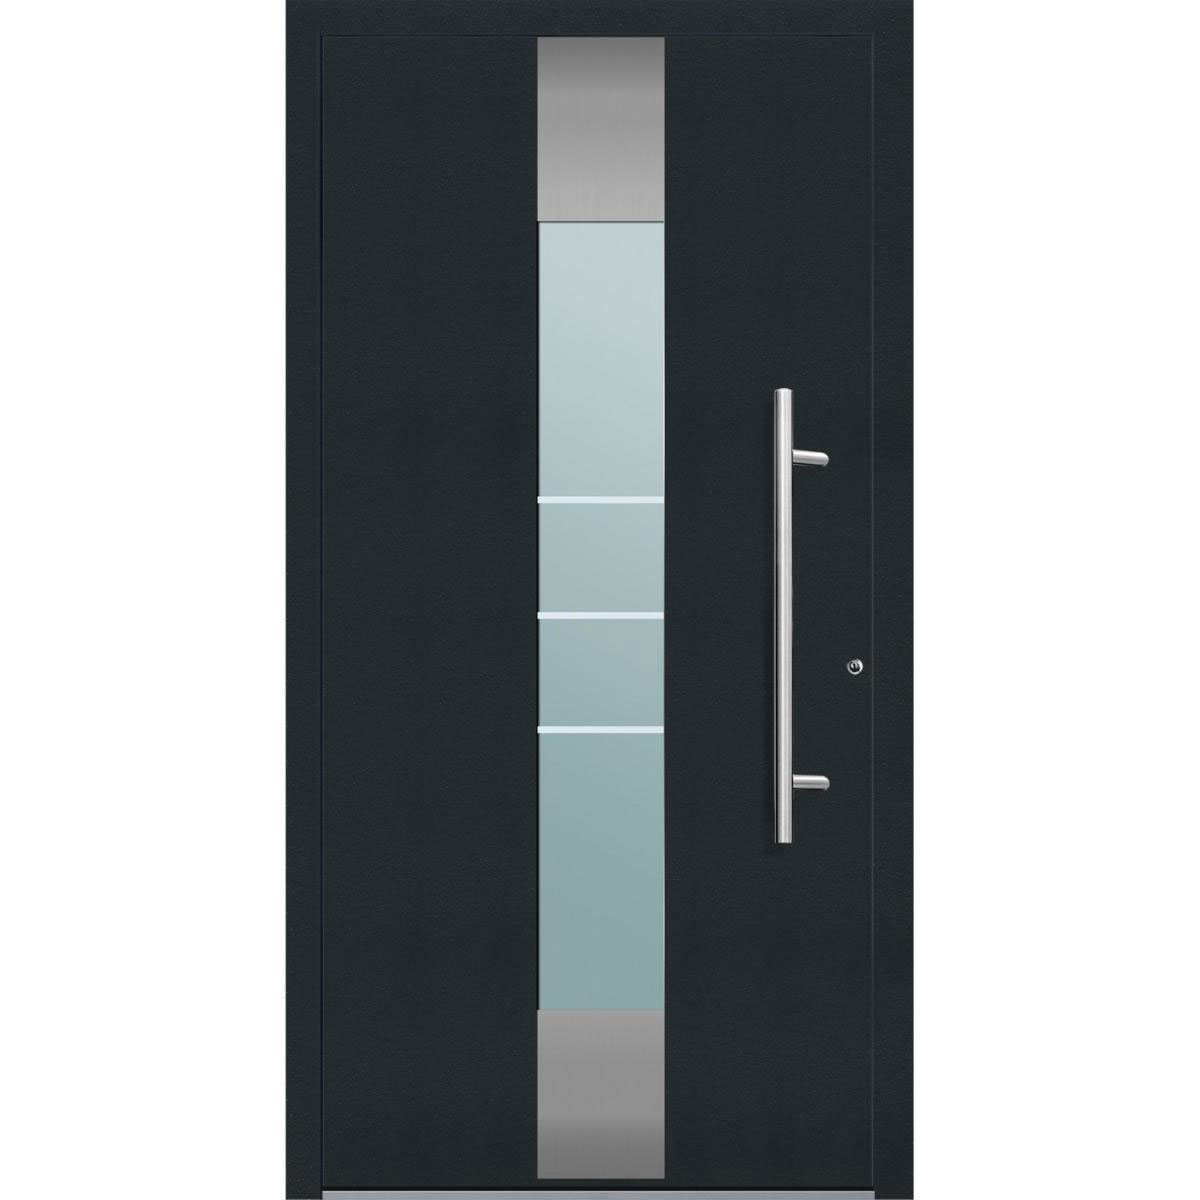 Aluminium Sicherheits-Haustür „Catania Exklusiv“, 75mm, anthrazit, 100x210 cm, Anschlag rechts, inkl. Griffset